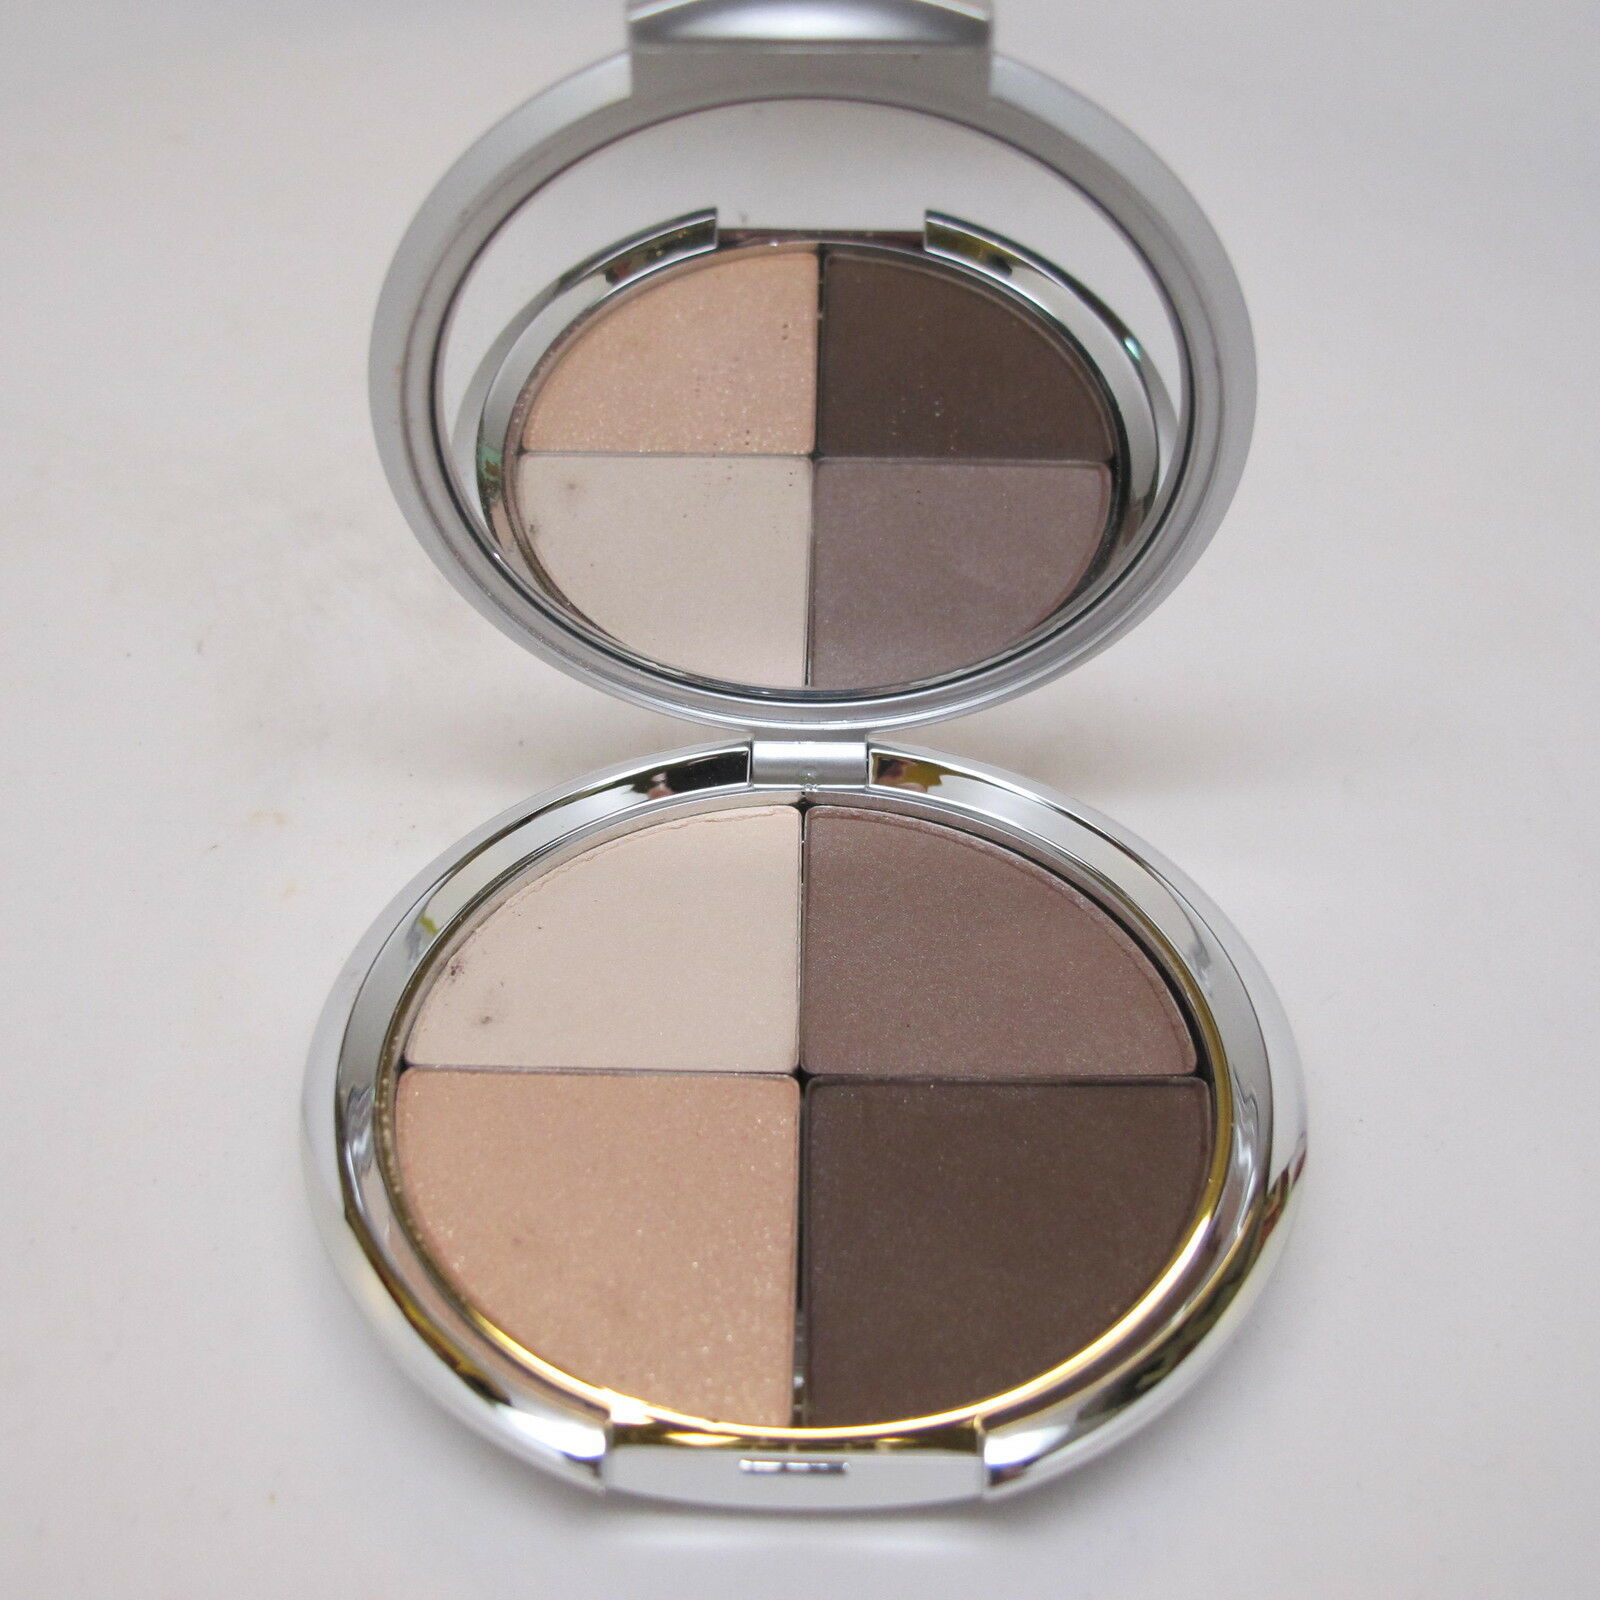 BORGHESE Kirkland Signature Eyeshadow Quad ( COCOA CREAM) 0.28 oz NO BOX - $14.84